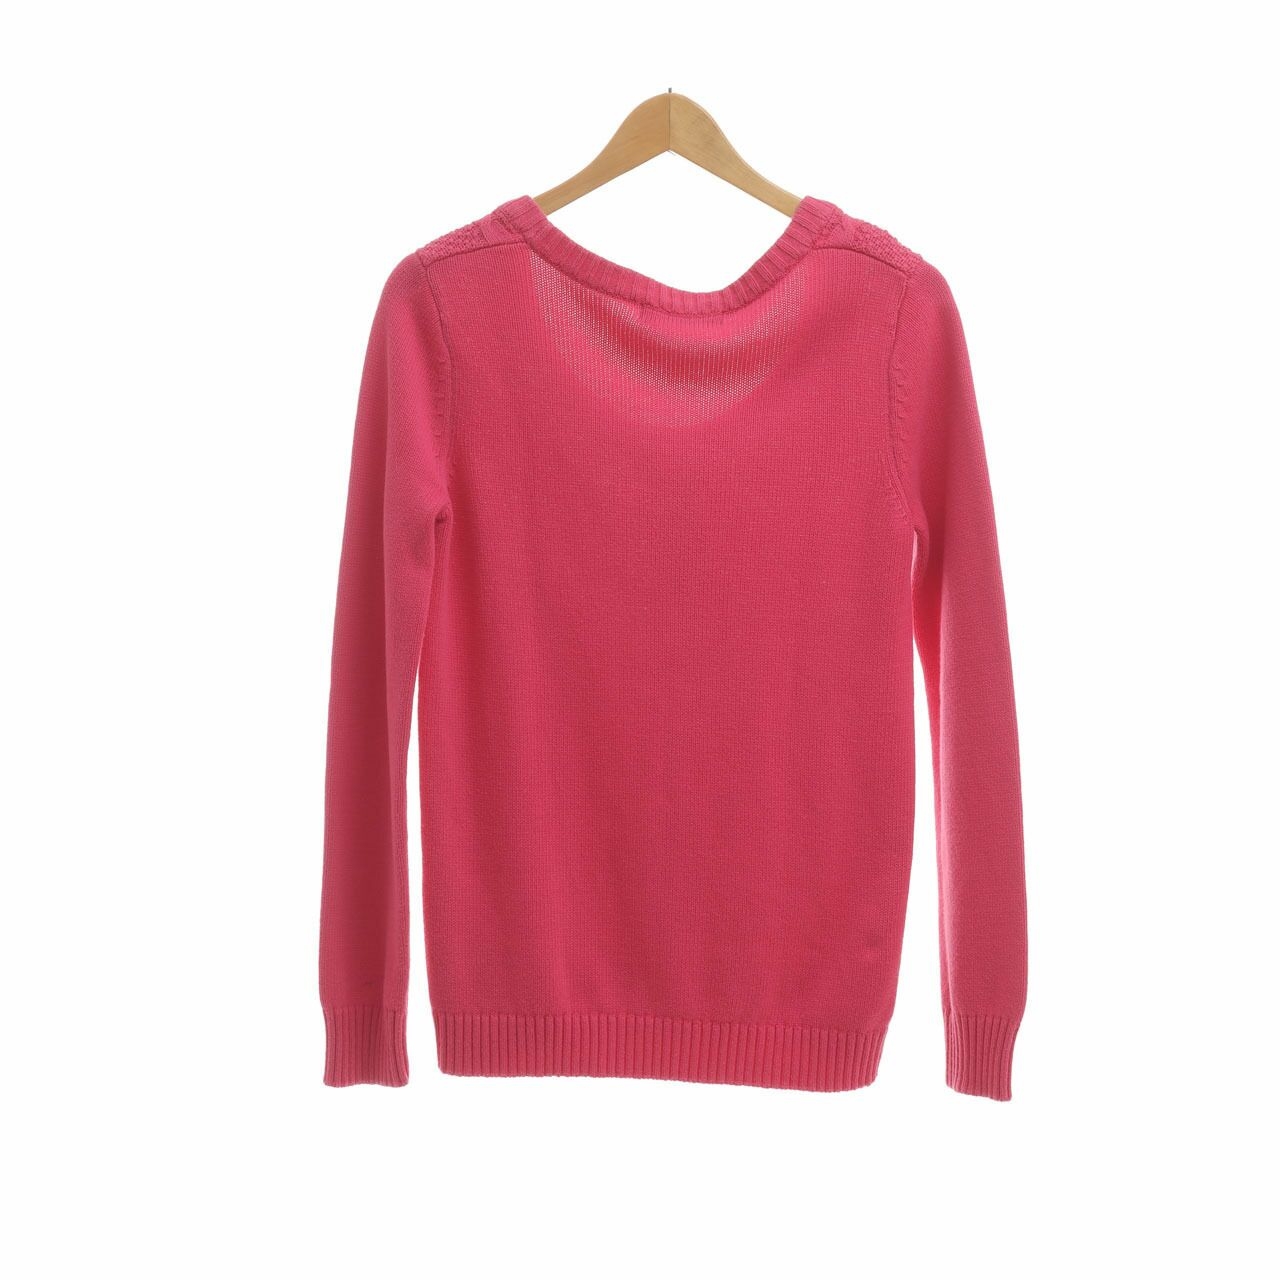 Coldwear Pink Sweater